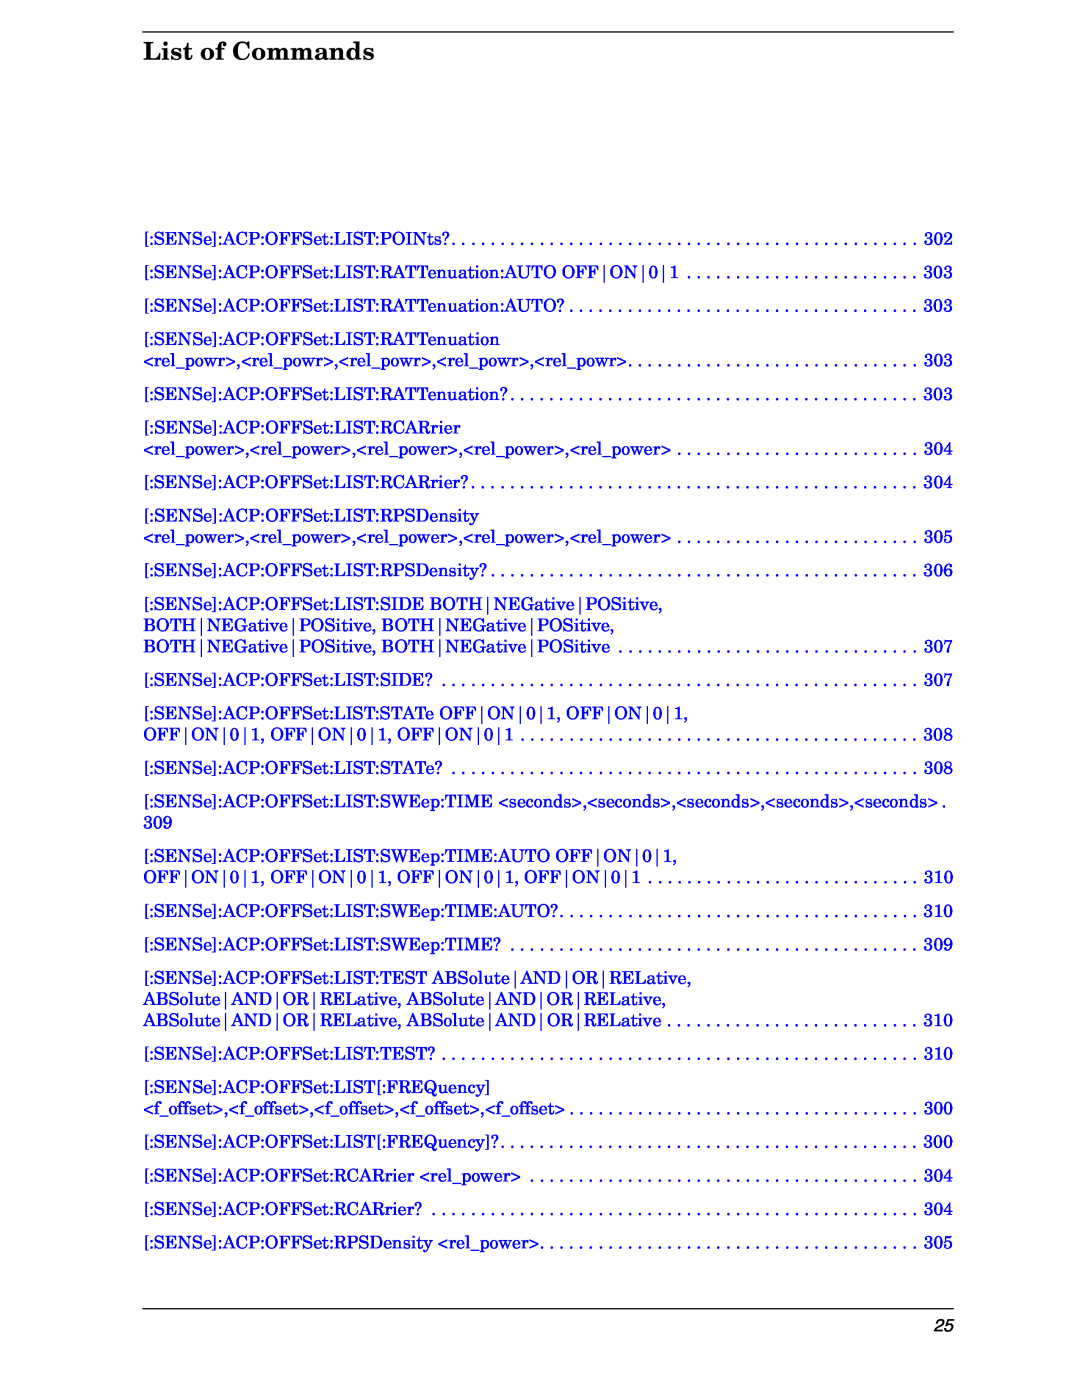 Agilent Technologies E4406A VSA manual List of Commands, SENSe:ACP:OFFSet:LIST:RATTenuation 